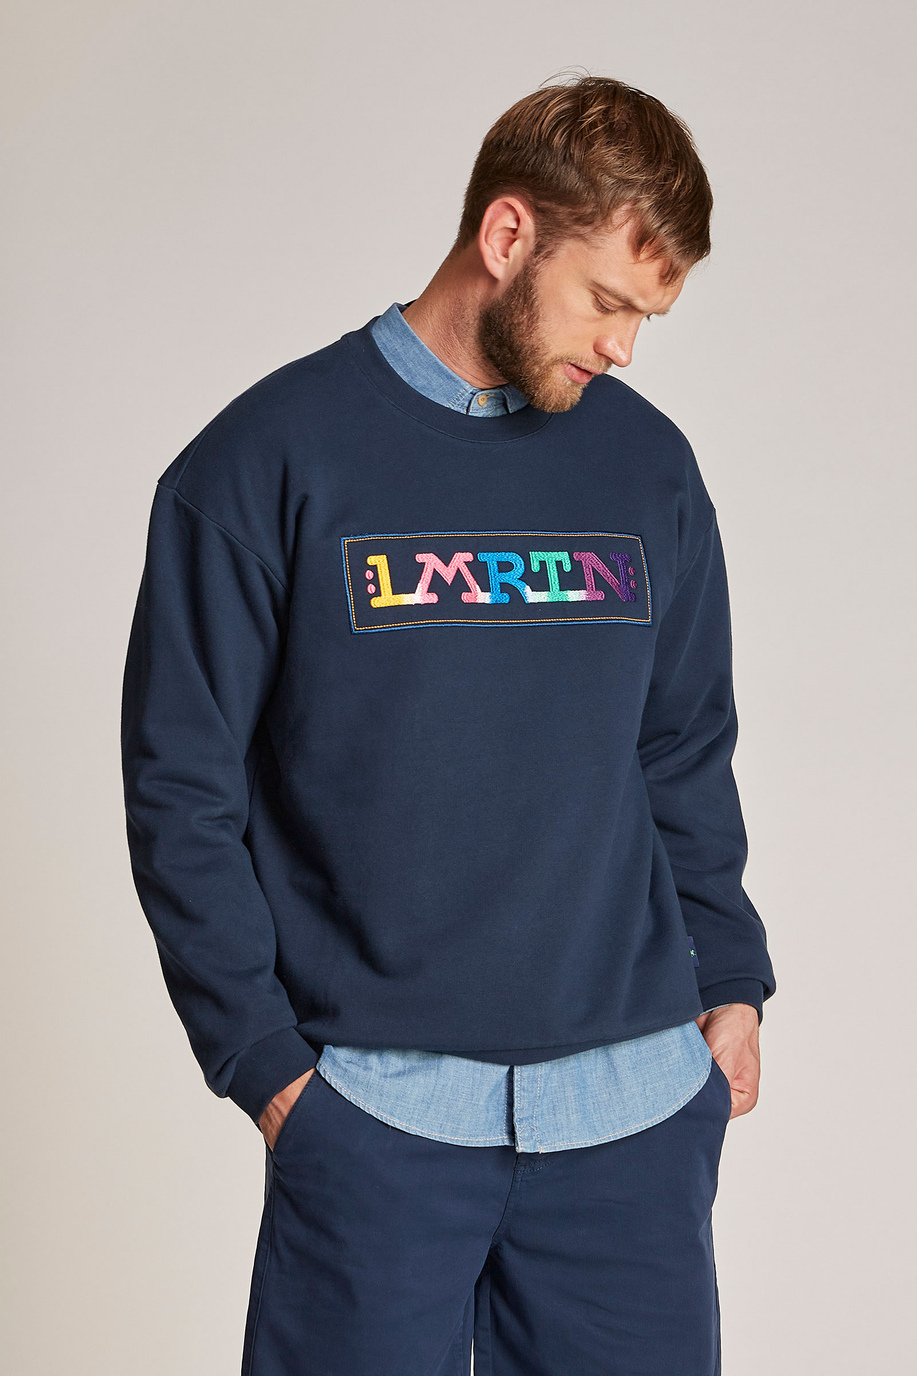 Men's oversized round-neck sweatshirt in 100% cotton fabric - Inspiration | La Martina - Official Online Shop